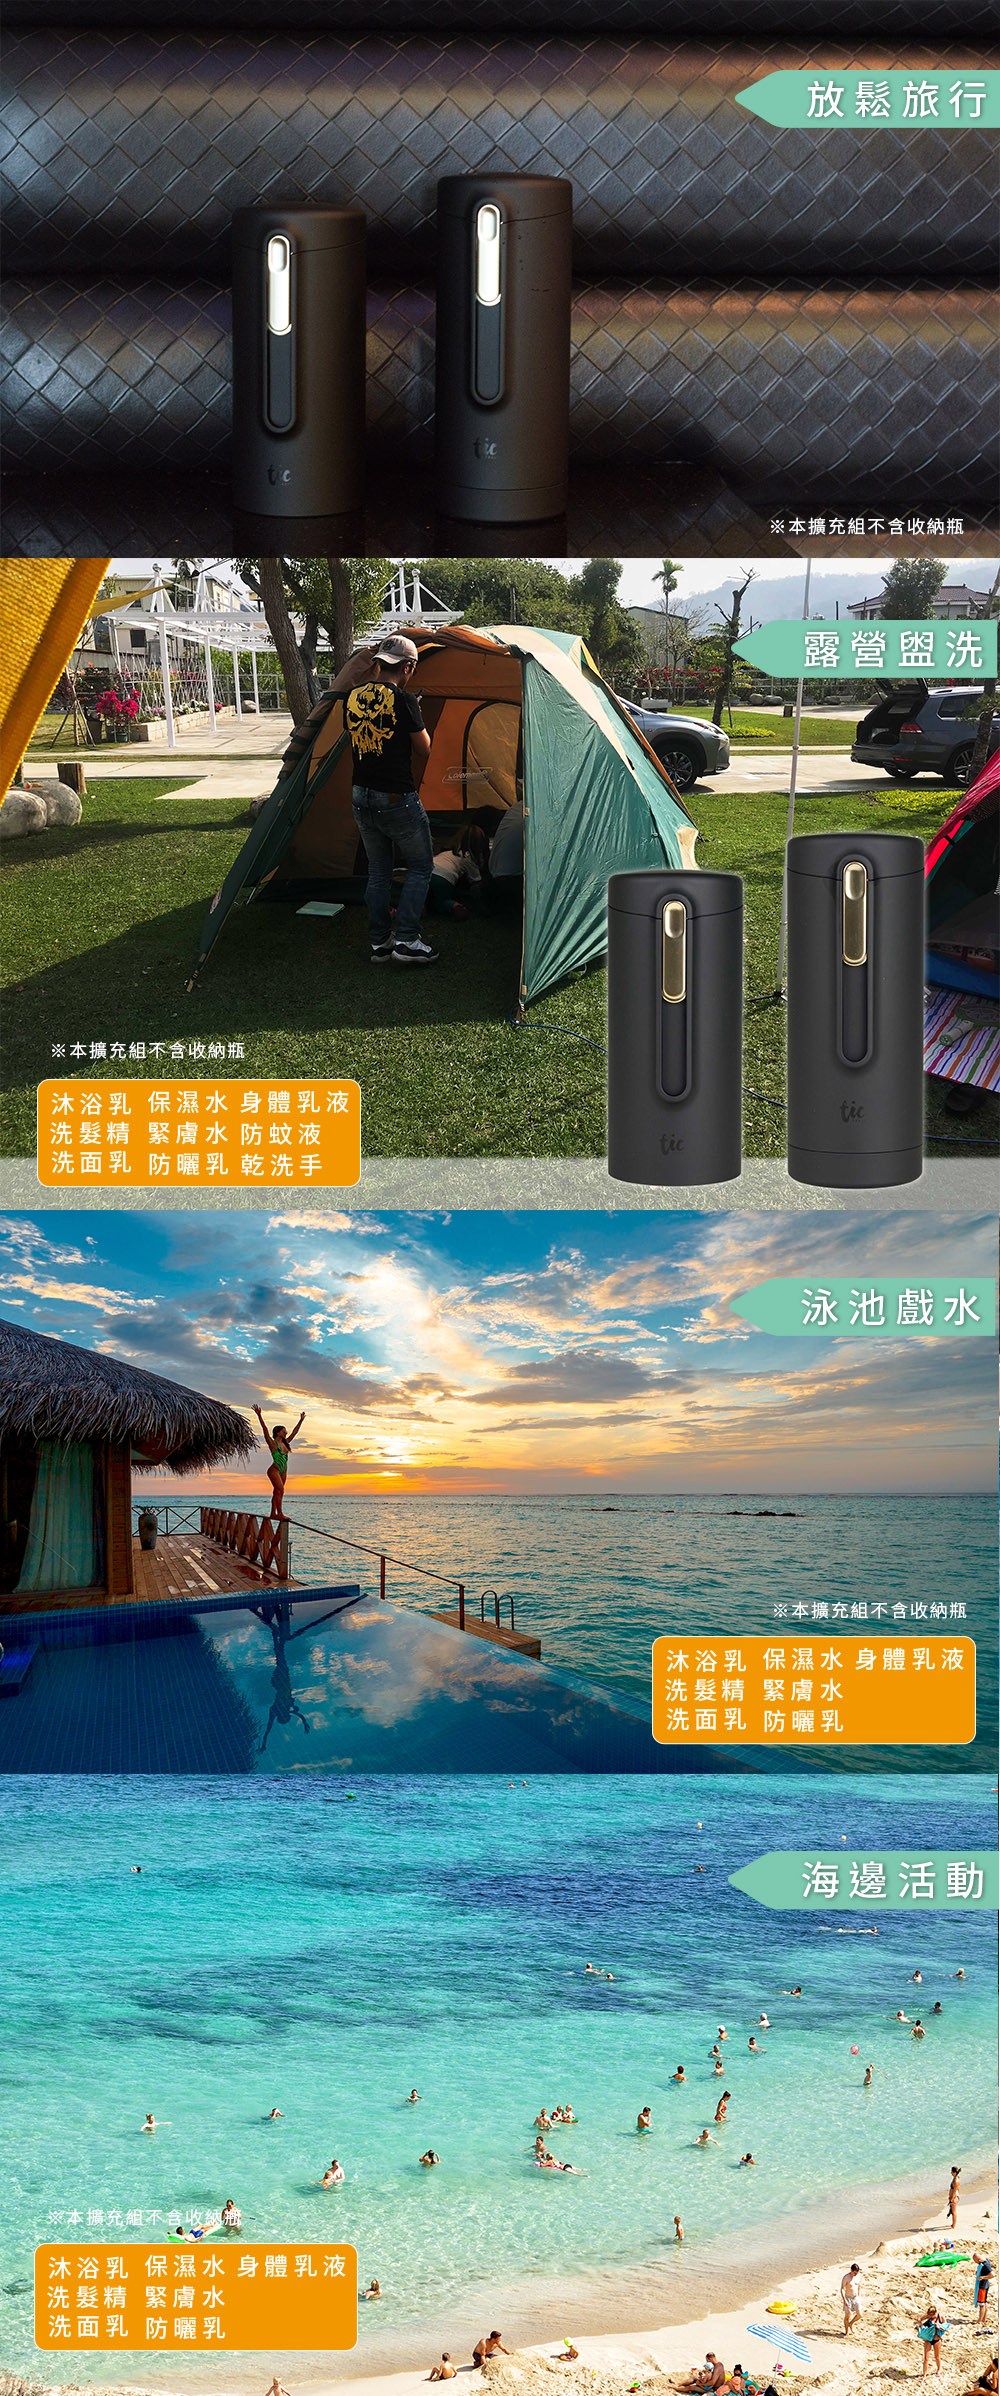 TIC BOTTLE V2.0在露營區的帳篷旁,一個在海邊的無邊際泳池,人潮眾多的海灘